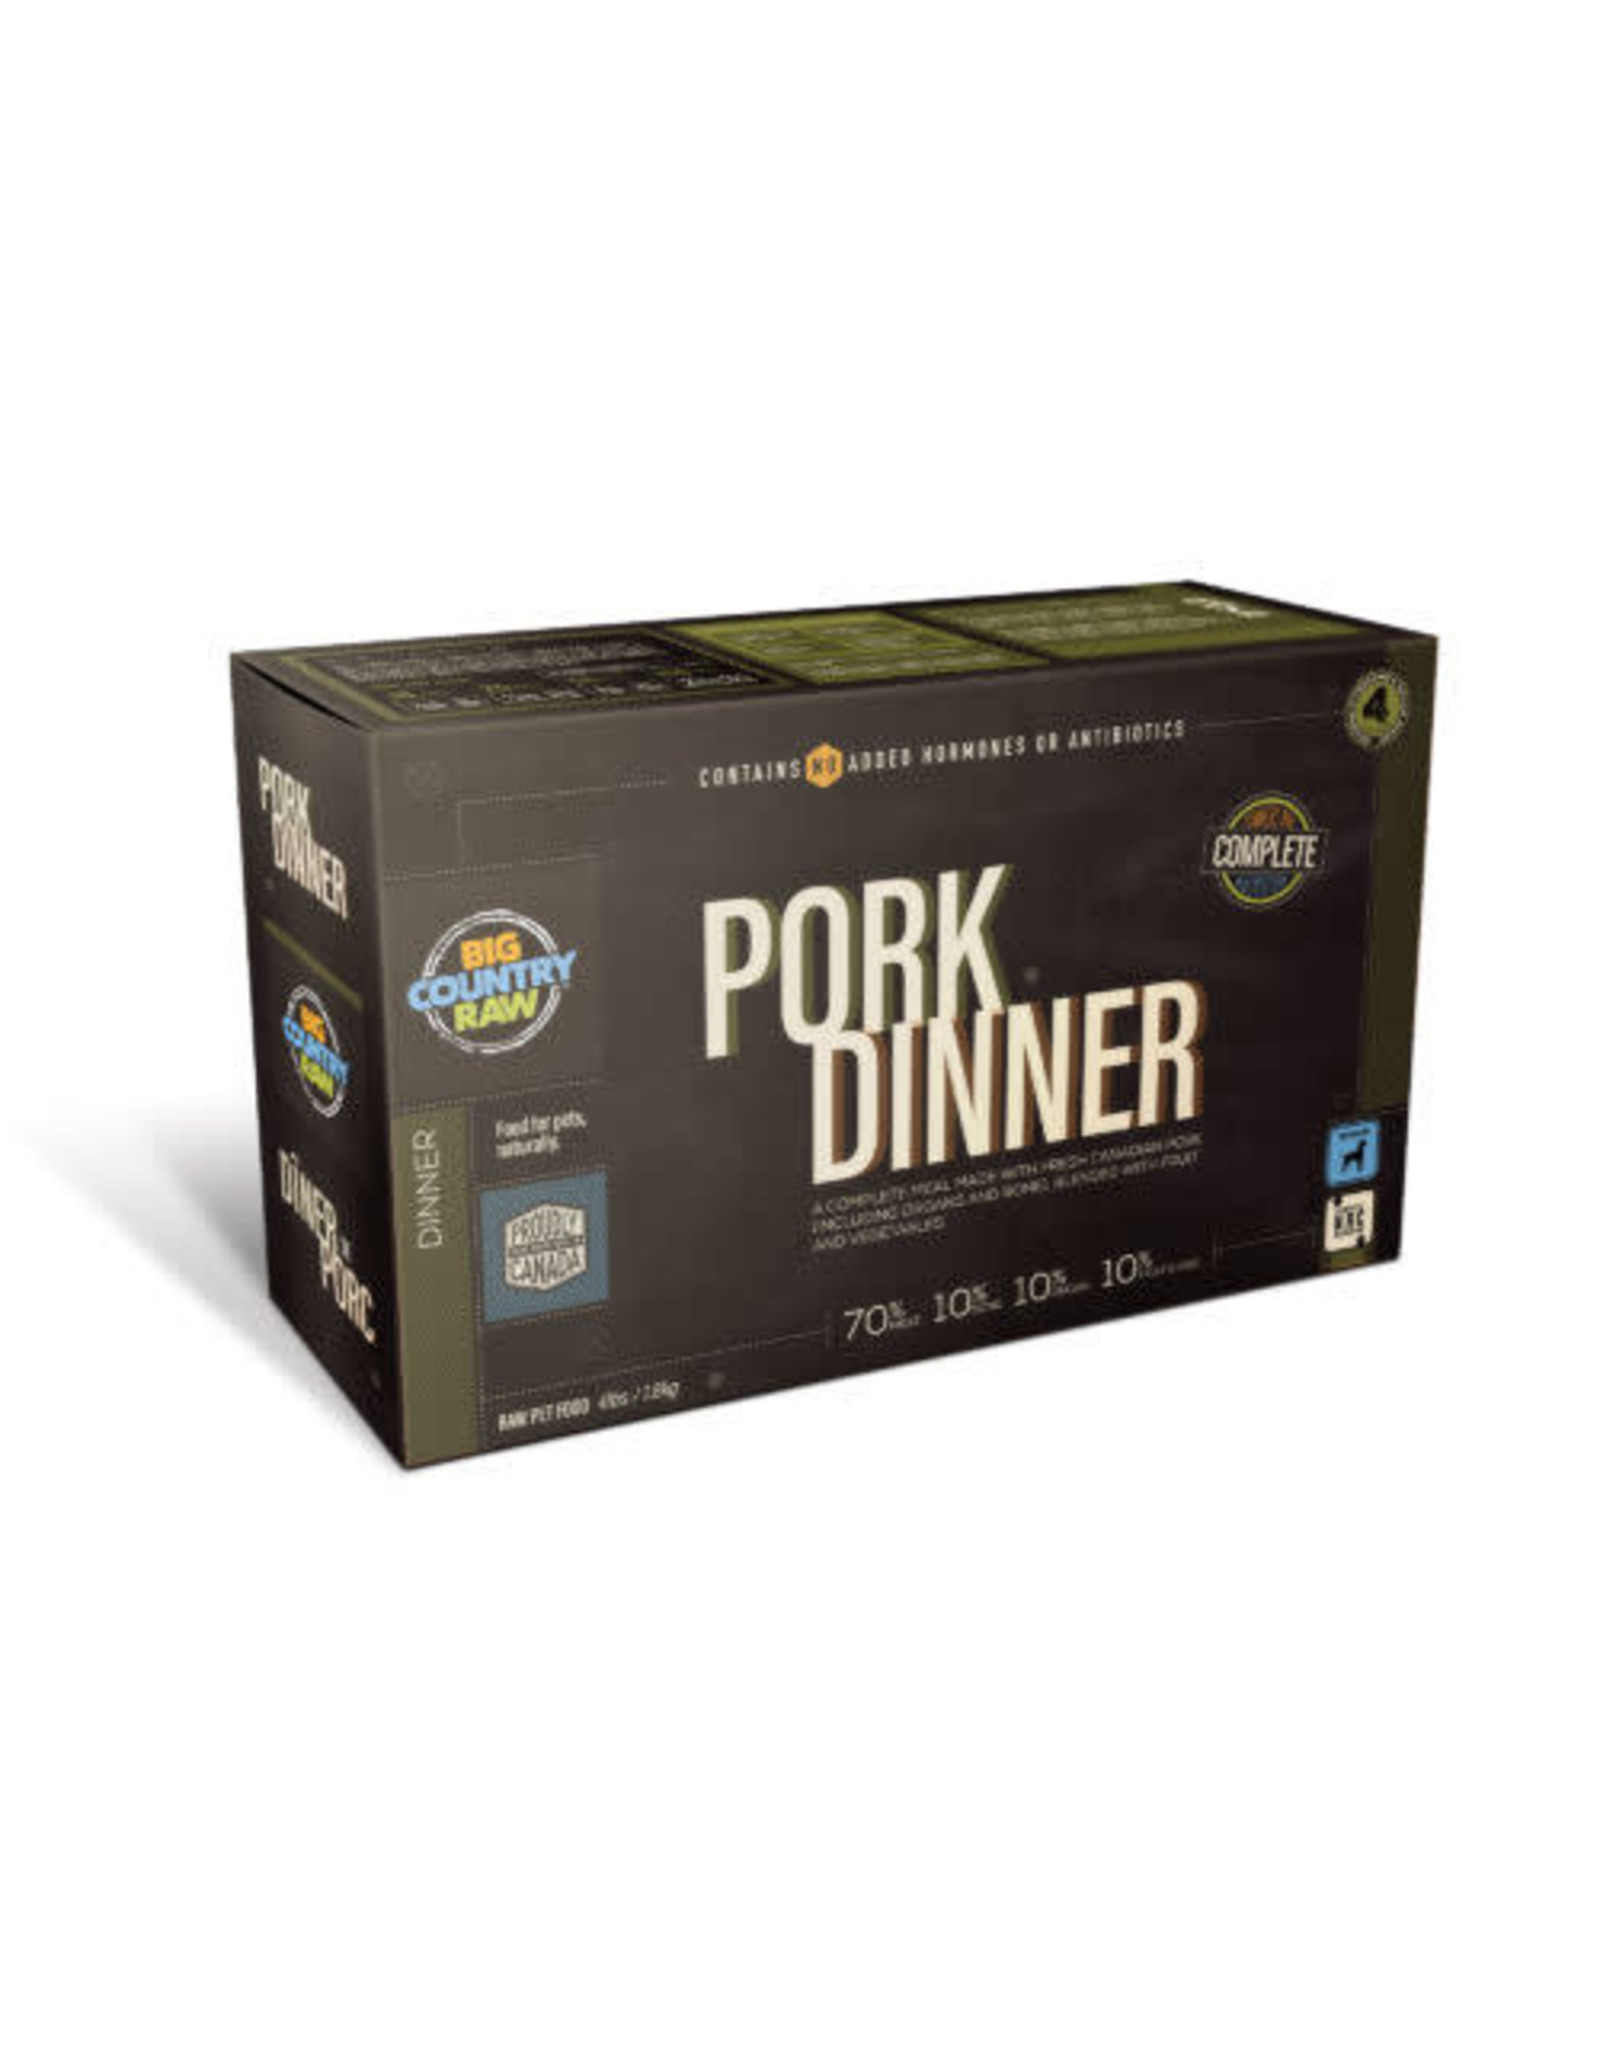 Big Country Raw BCR - Pork Dinner Carton, 4lb